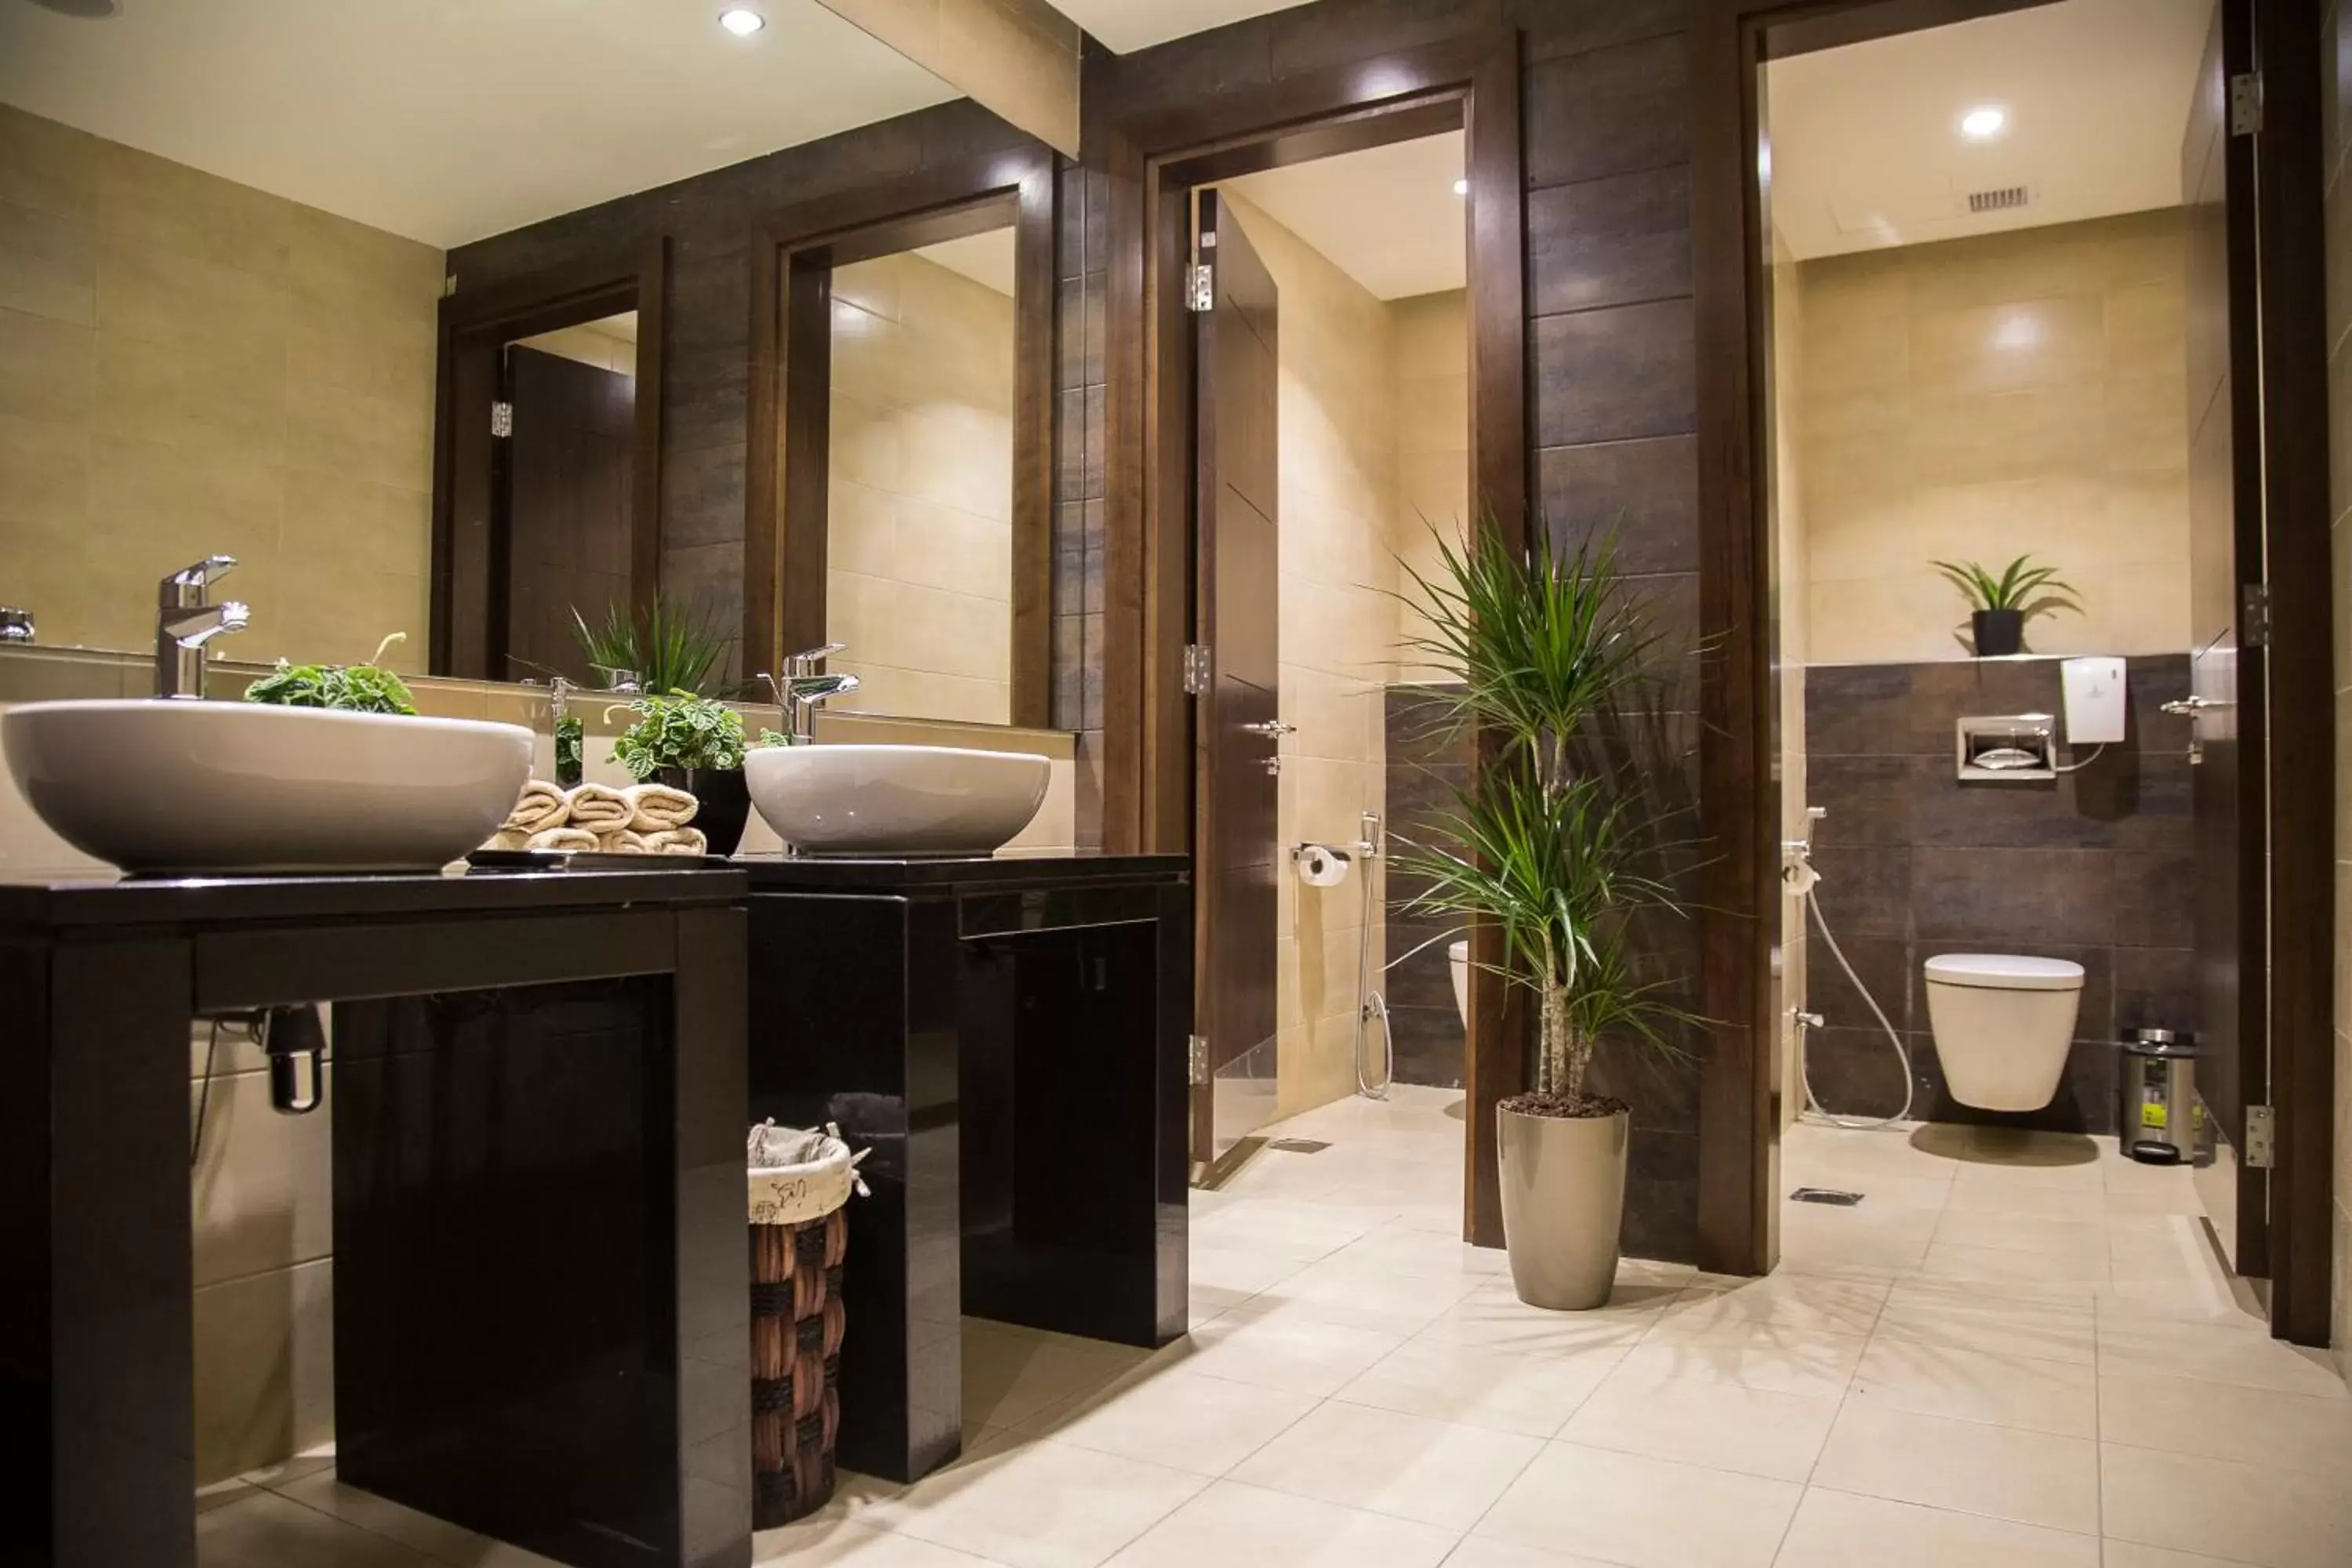 Area and facilities, Bathroom in Sulaf Luxury Hotel